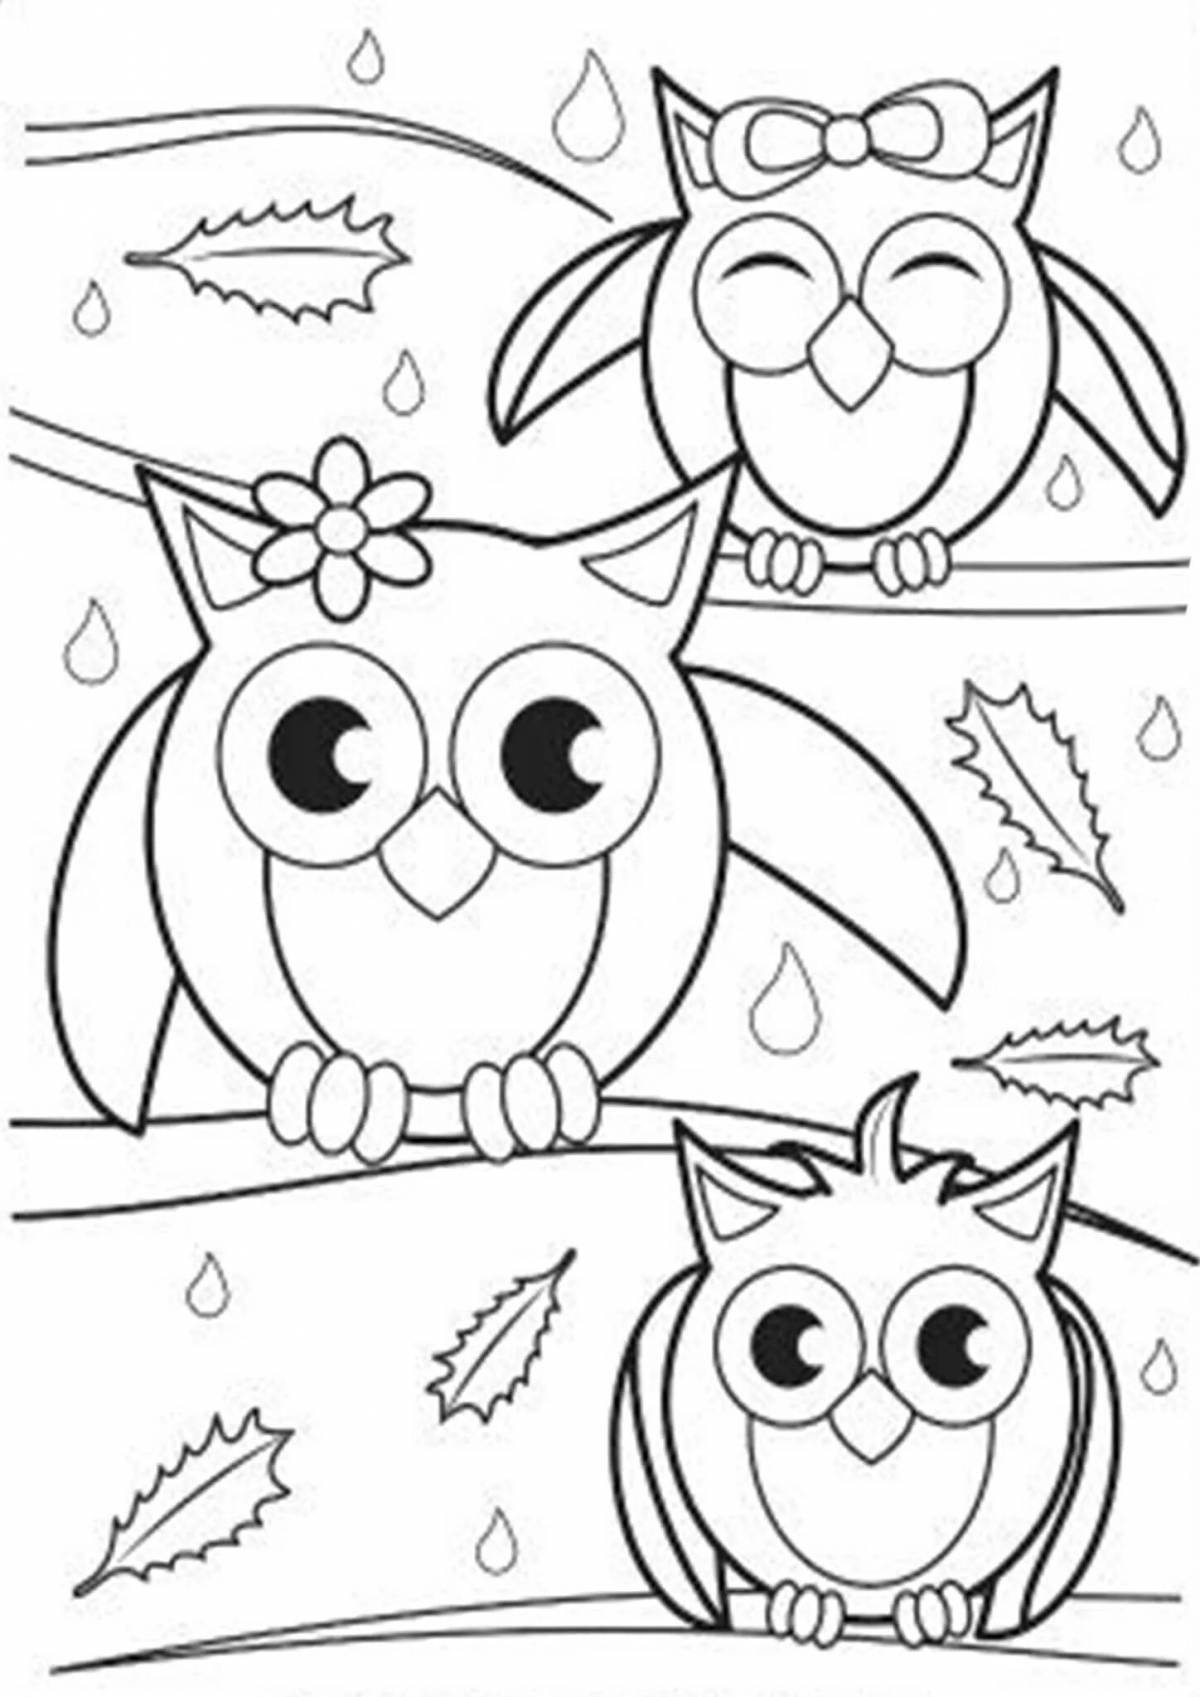 Hip-hop cute owlet coloring page